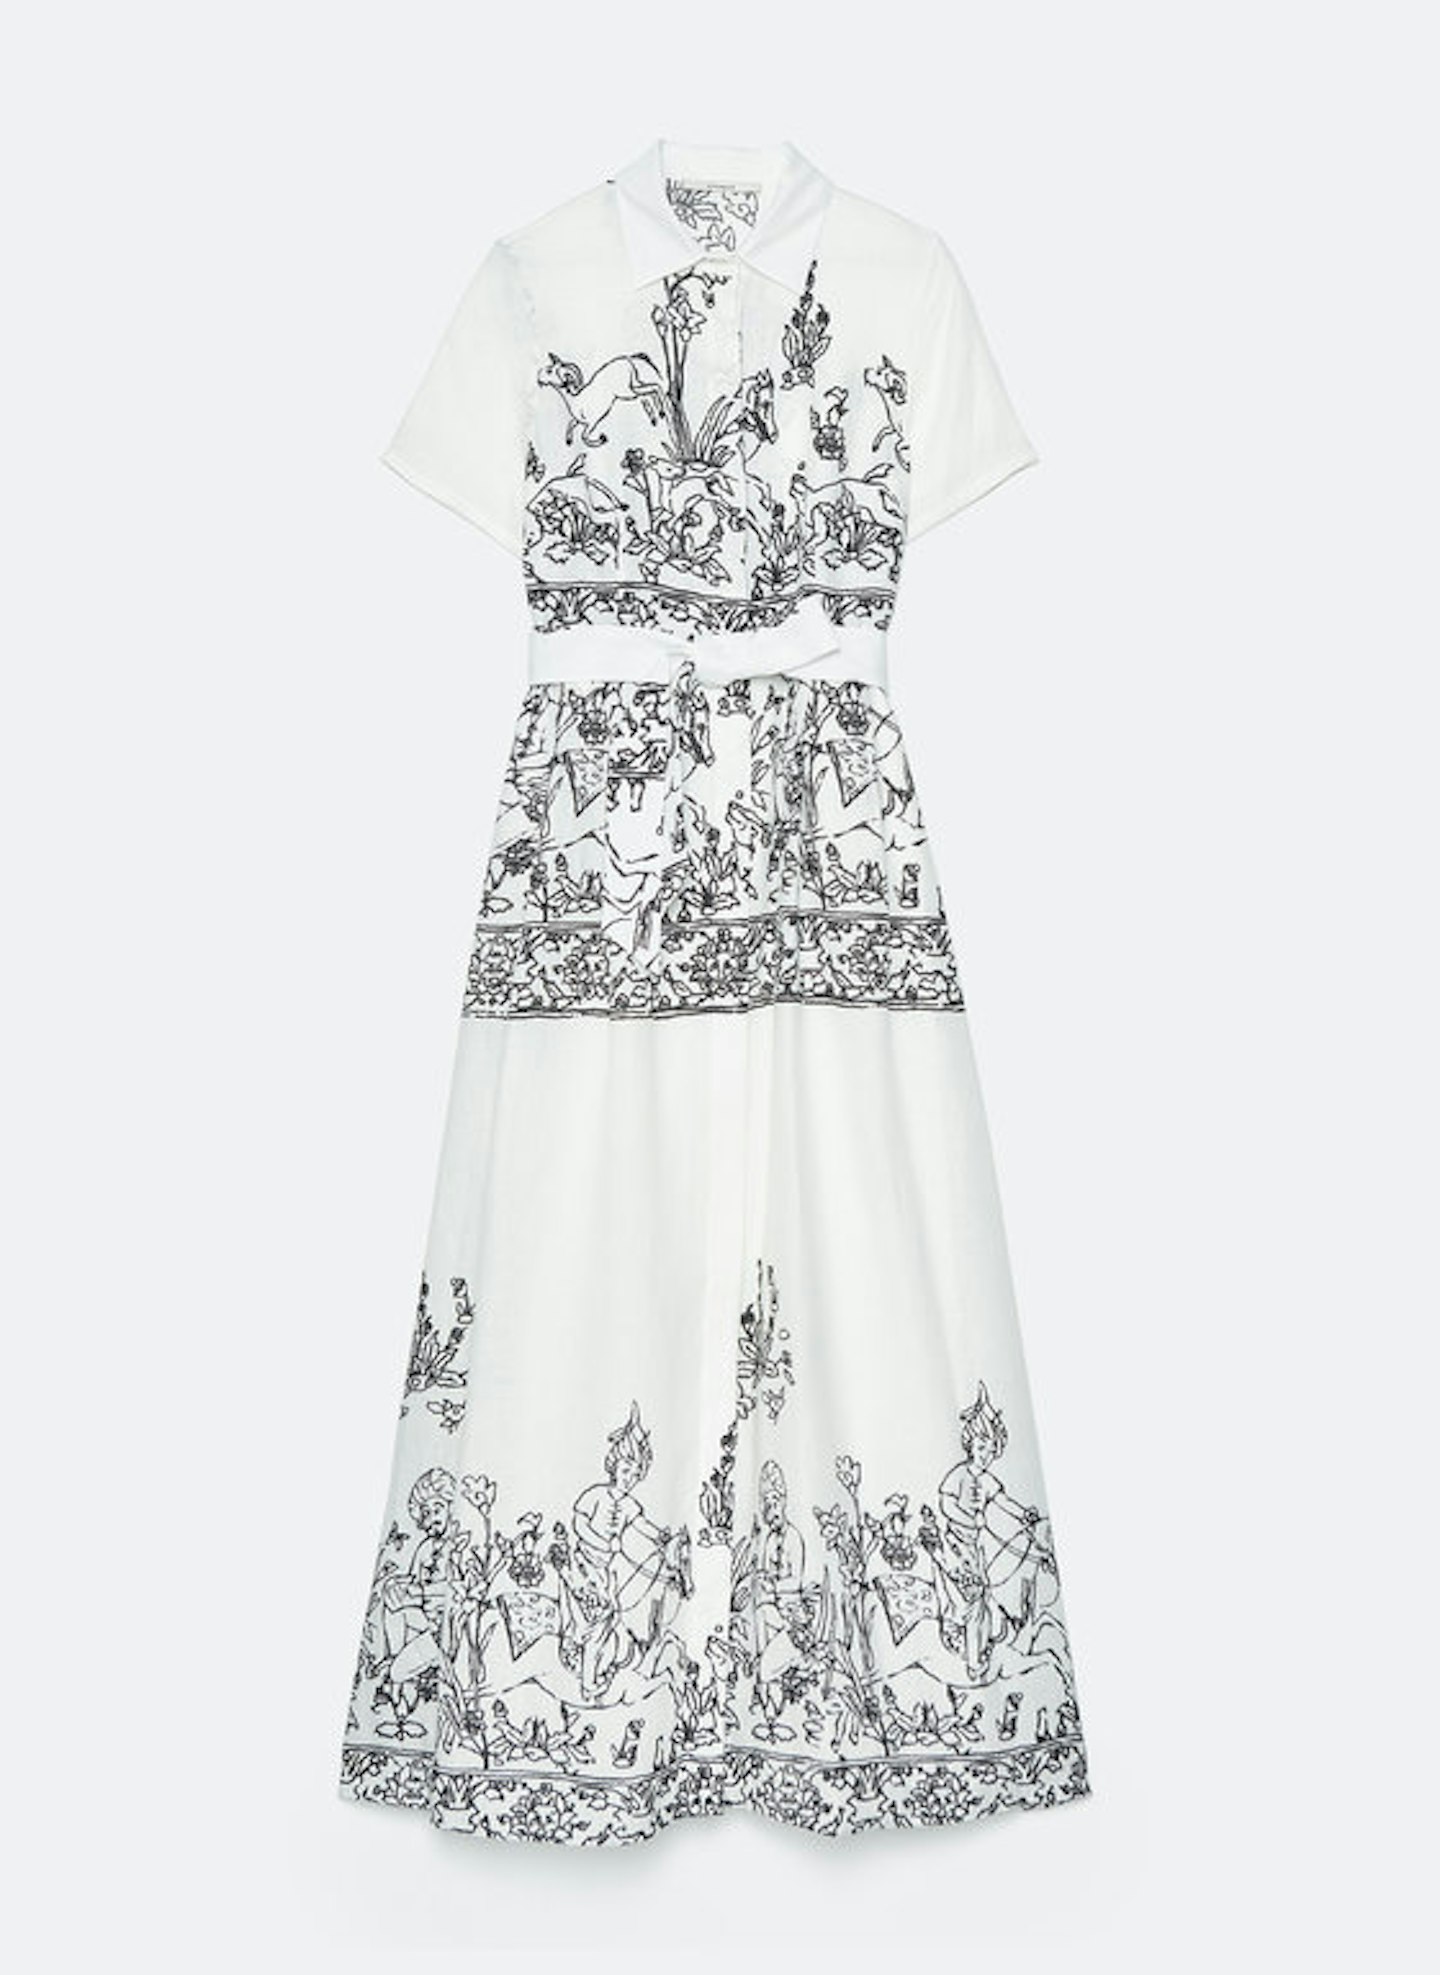 Uterque, Linen Printed Dress, £180